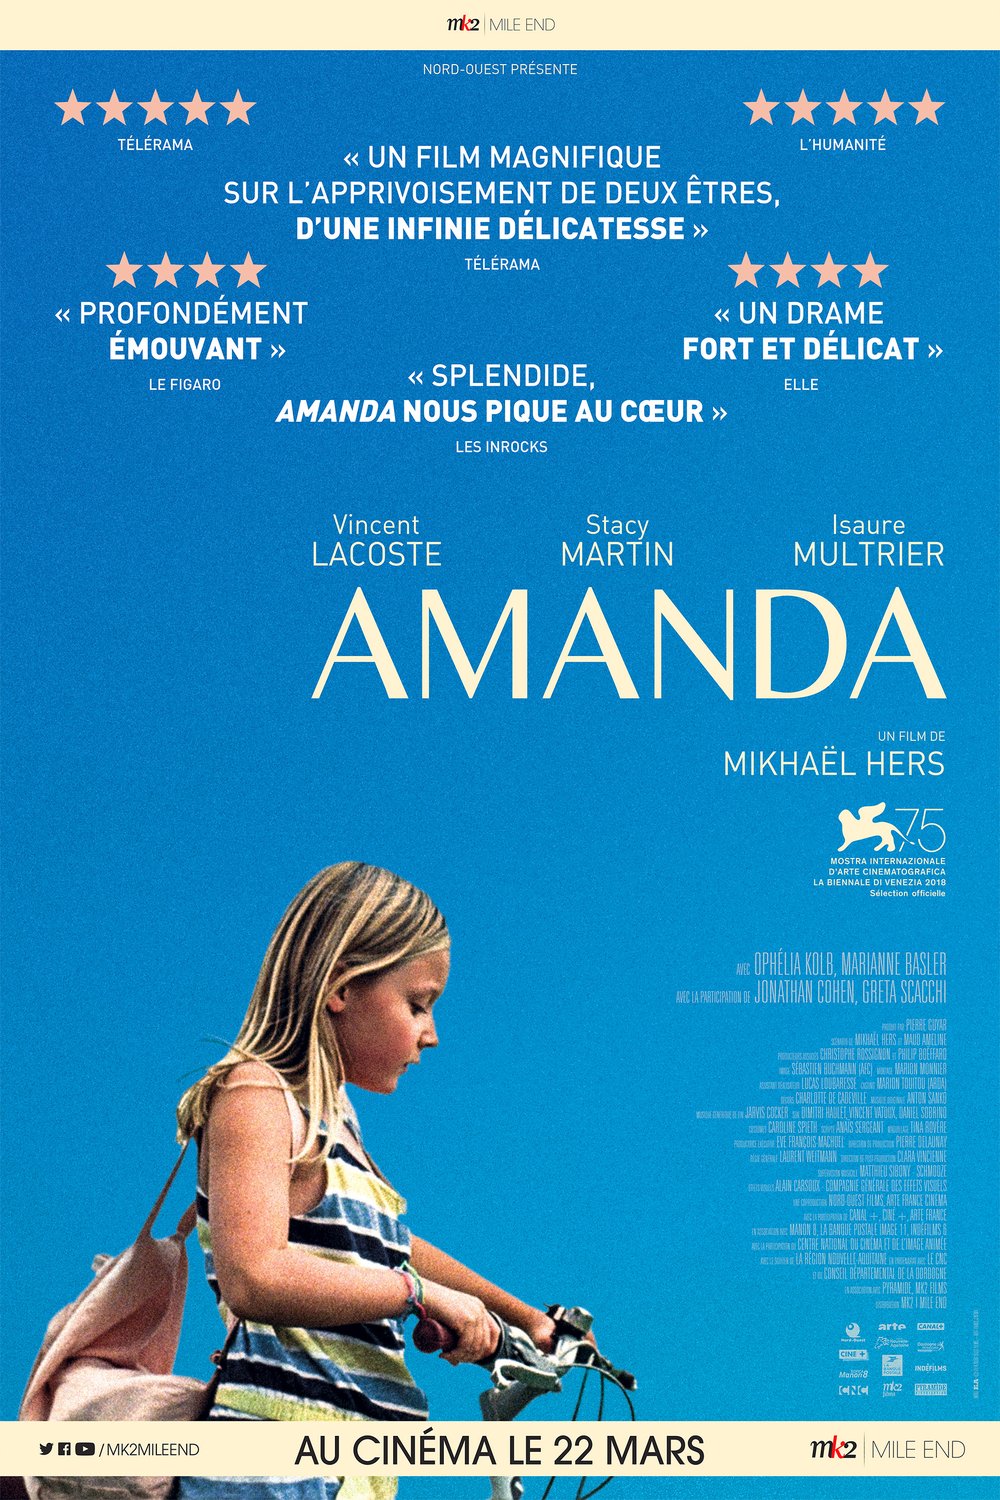 Poster of the movie Amanda